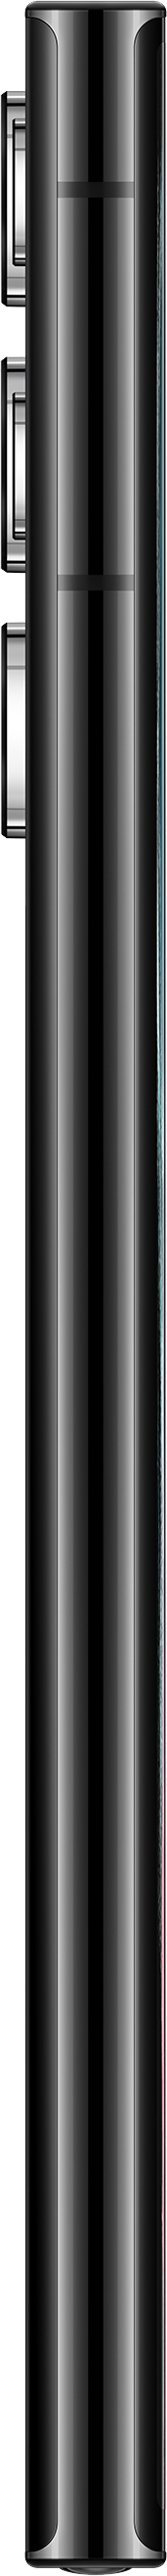 Samsung Galaxy S22 Ultra 256GB Dual-SIM Fantomsvart